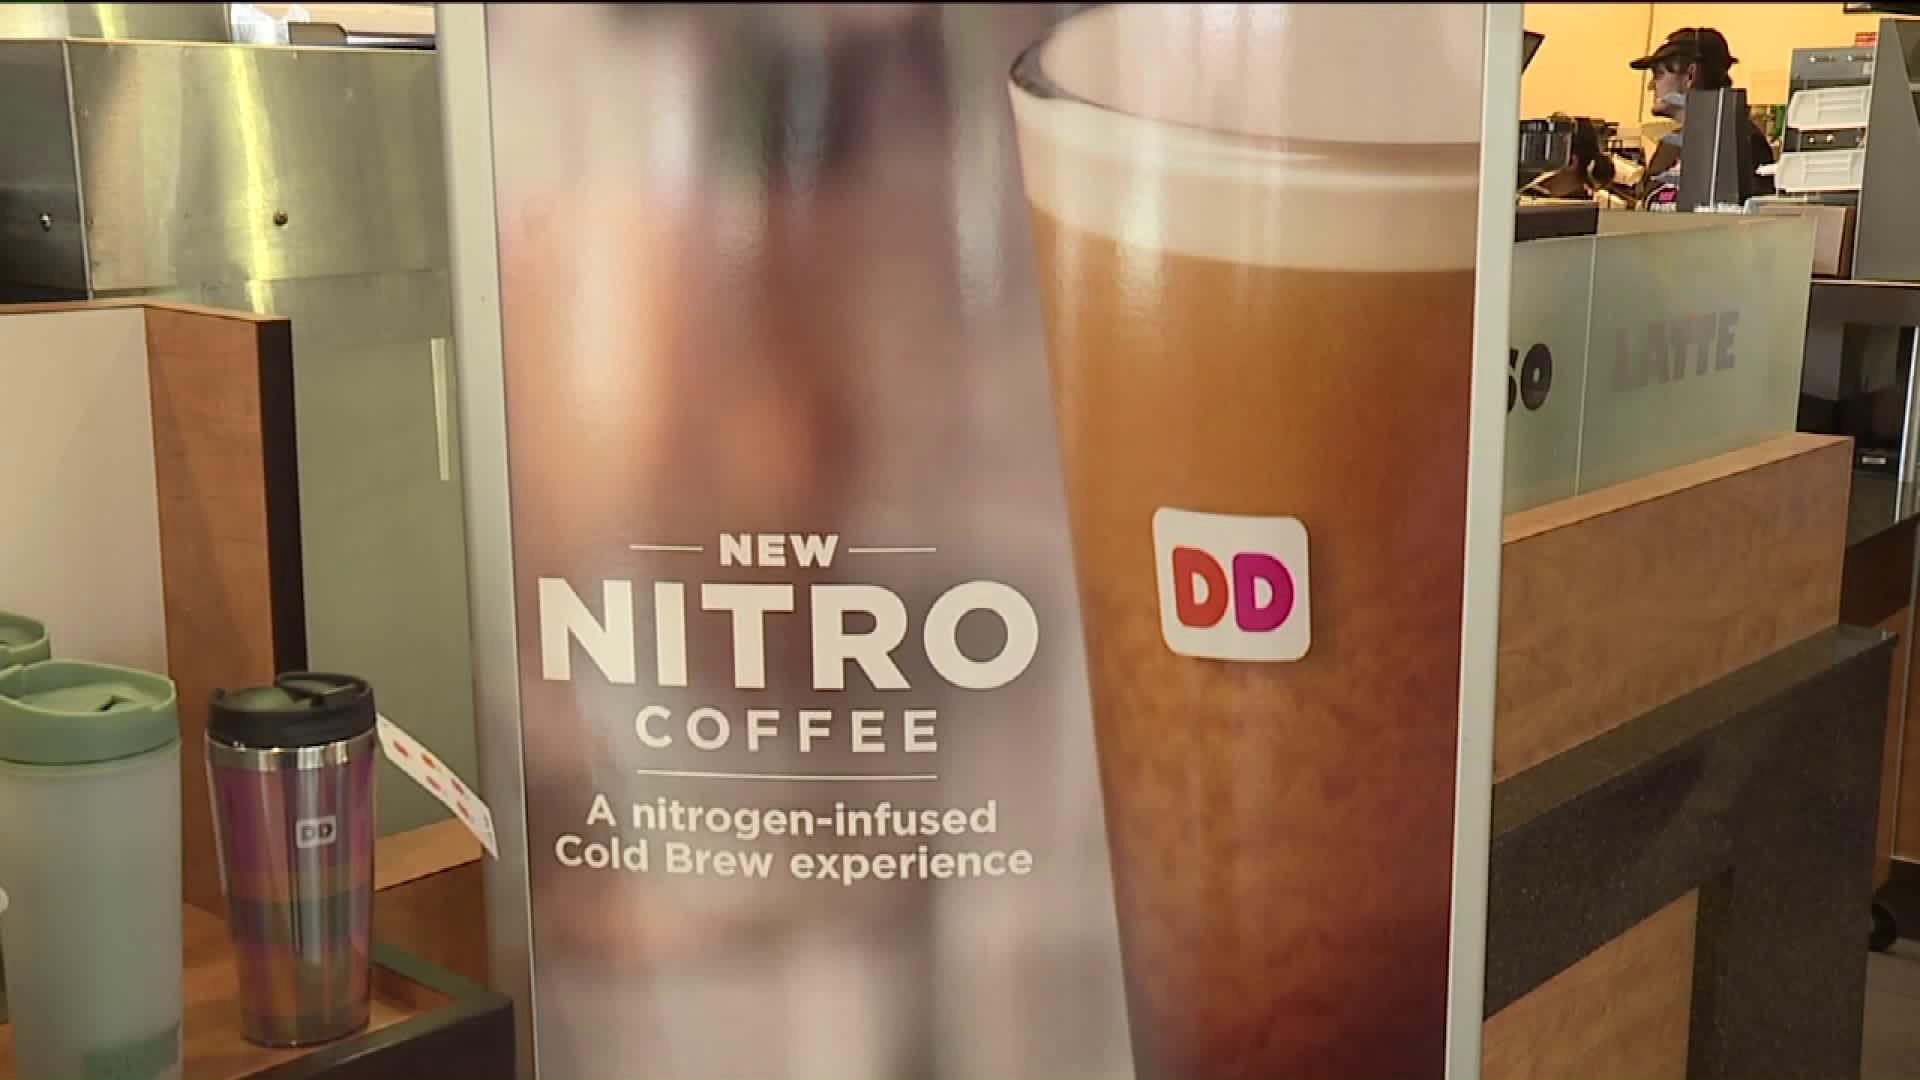 Taste Test: Dunkin Donuts Nitro Coffee